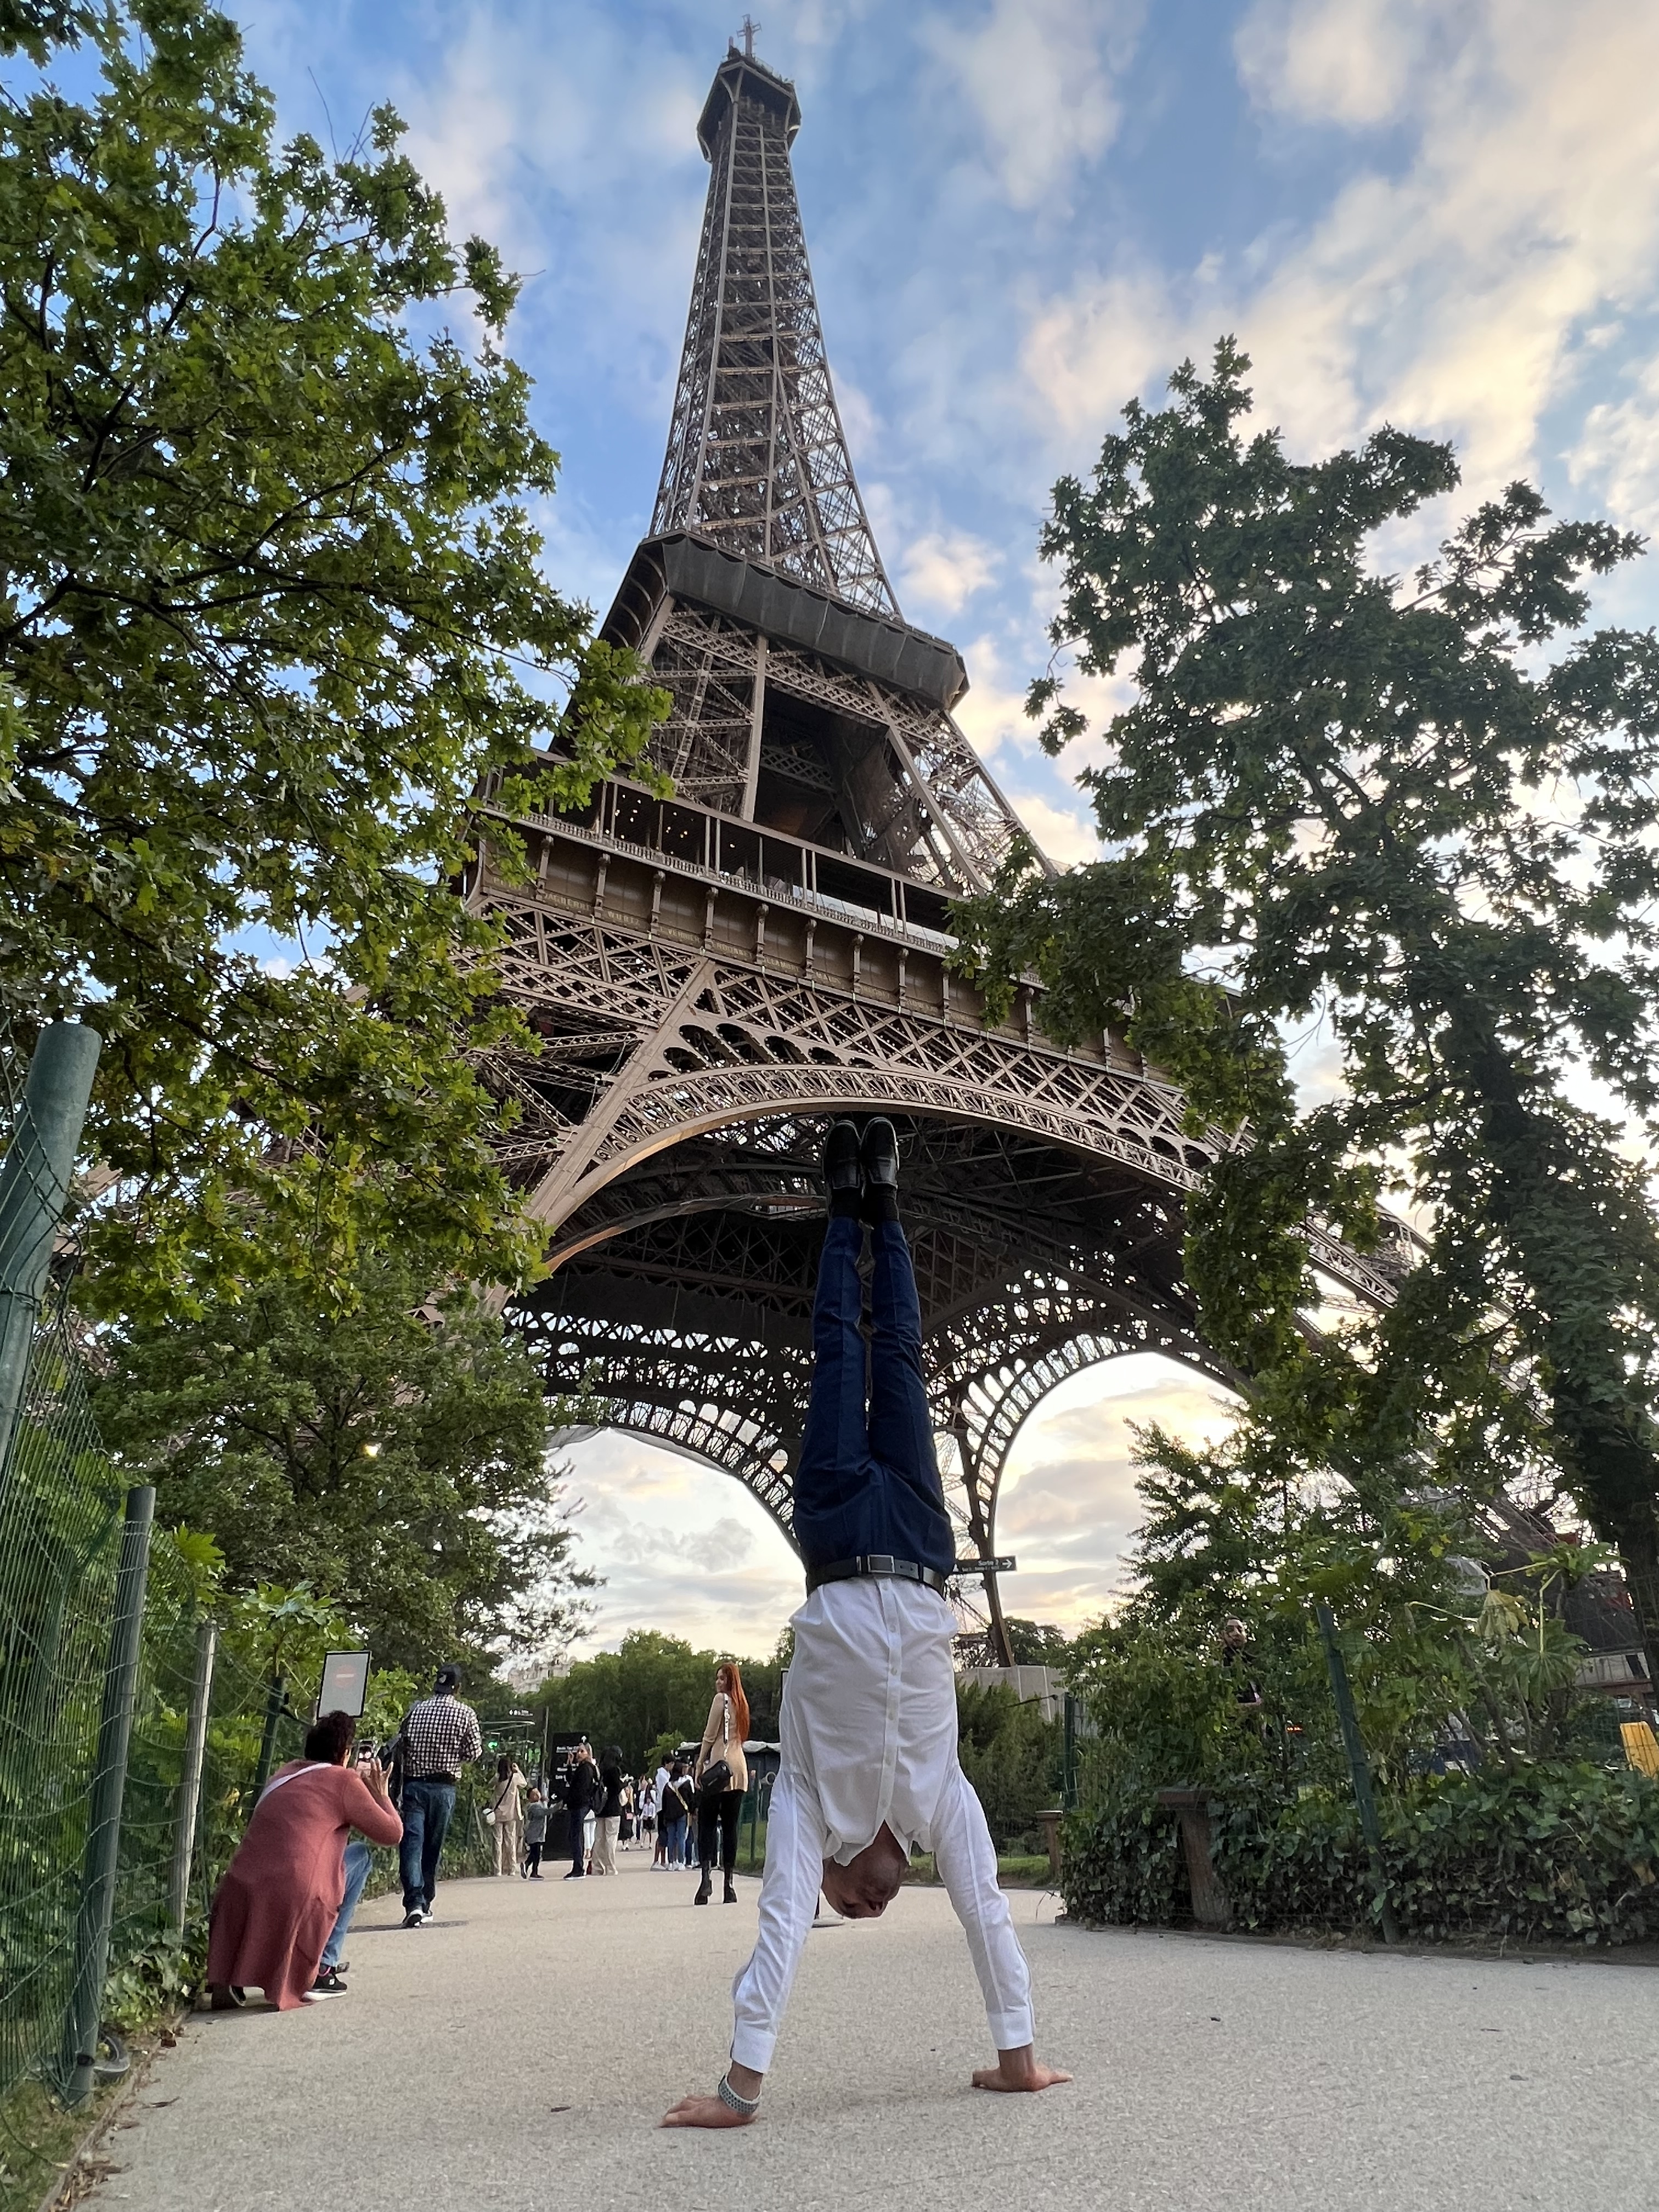 Handstand at the Eiffel Tower - Stefan Kolimechkov